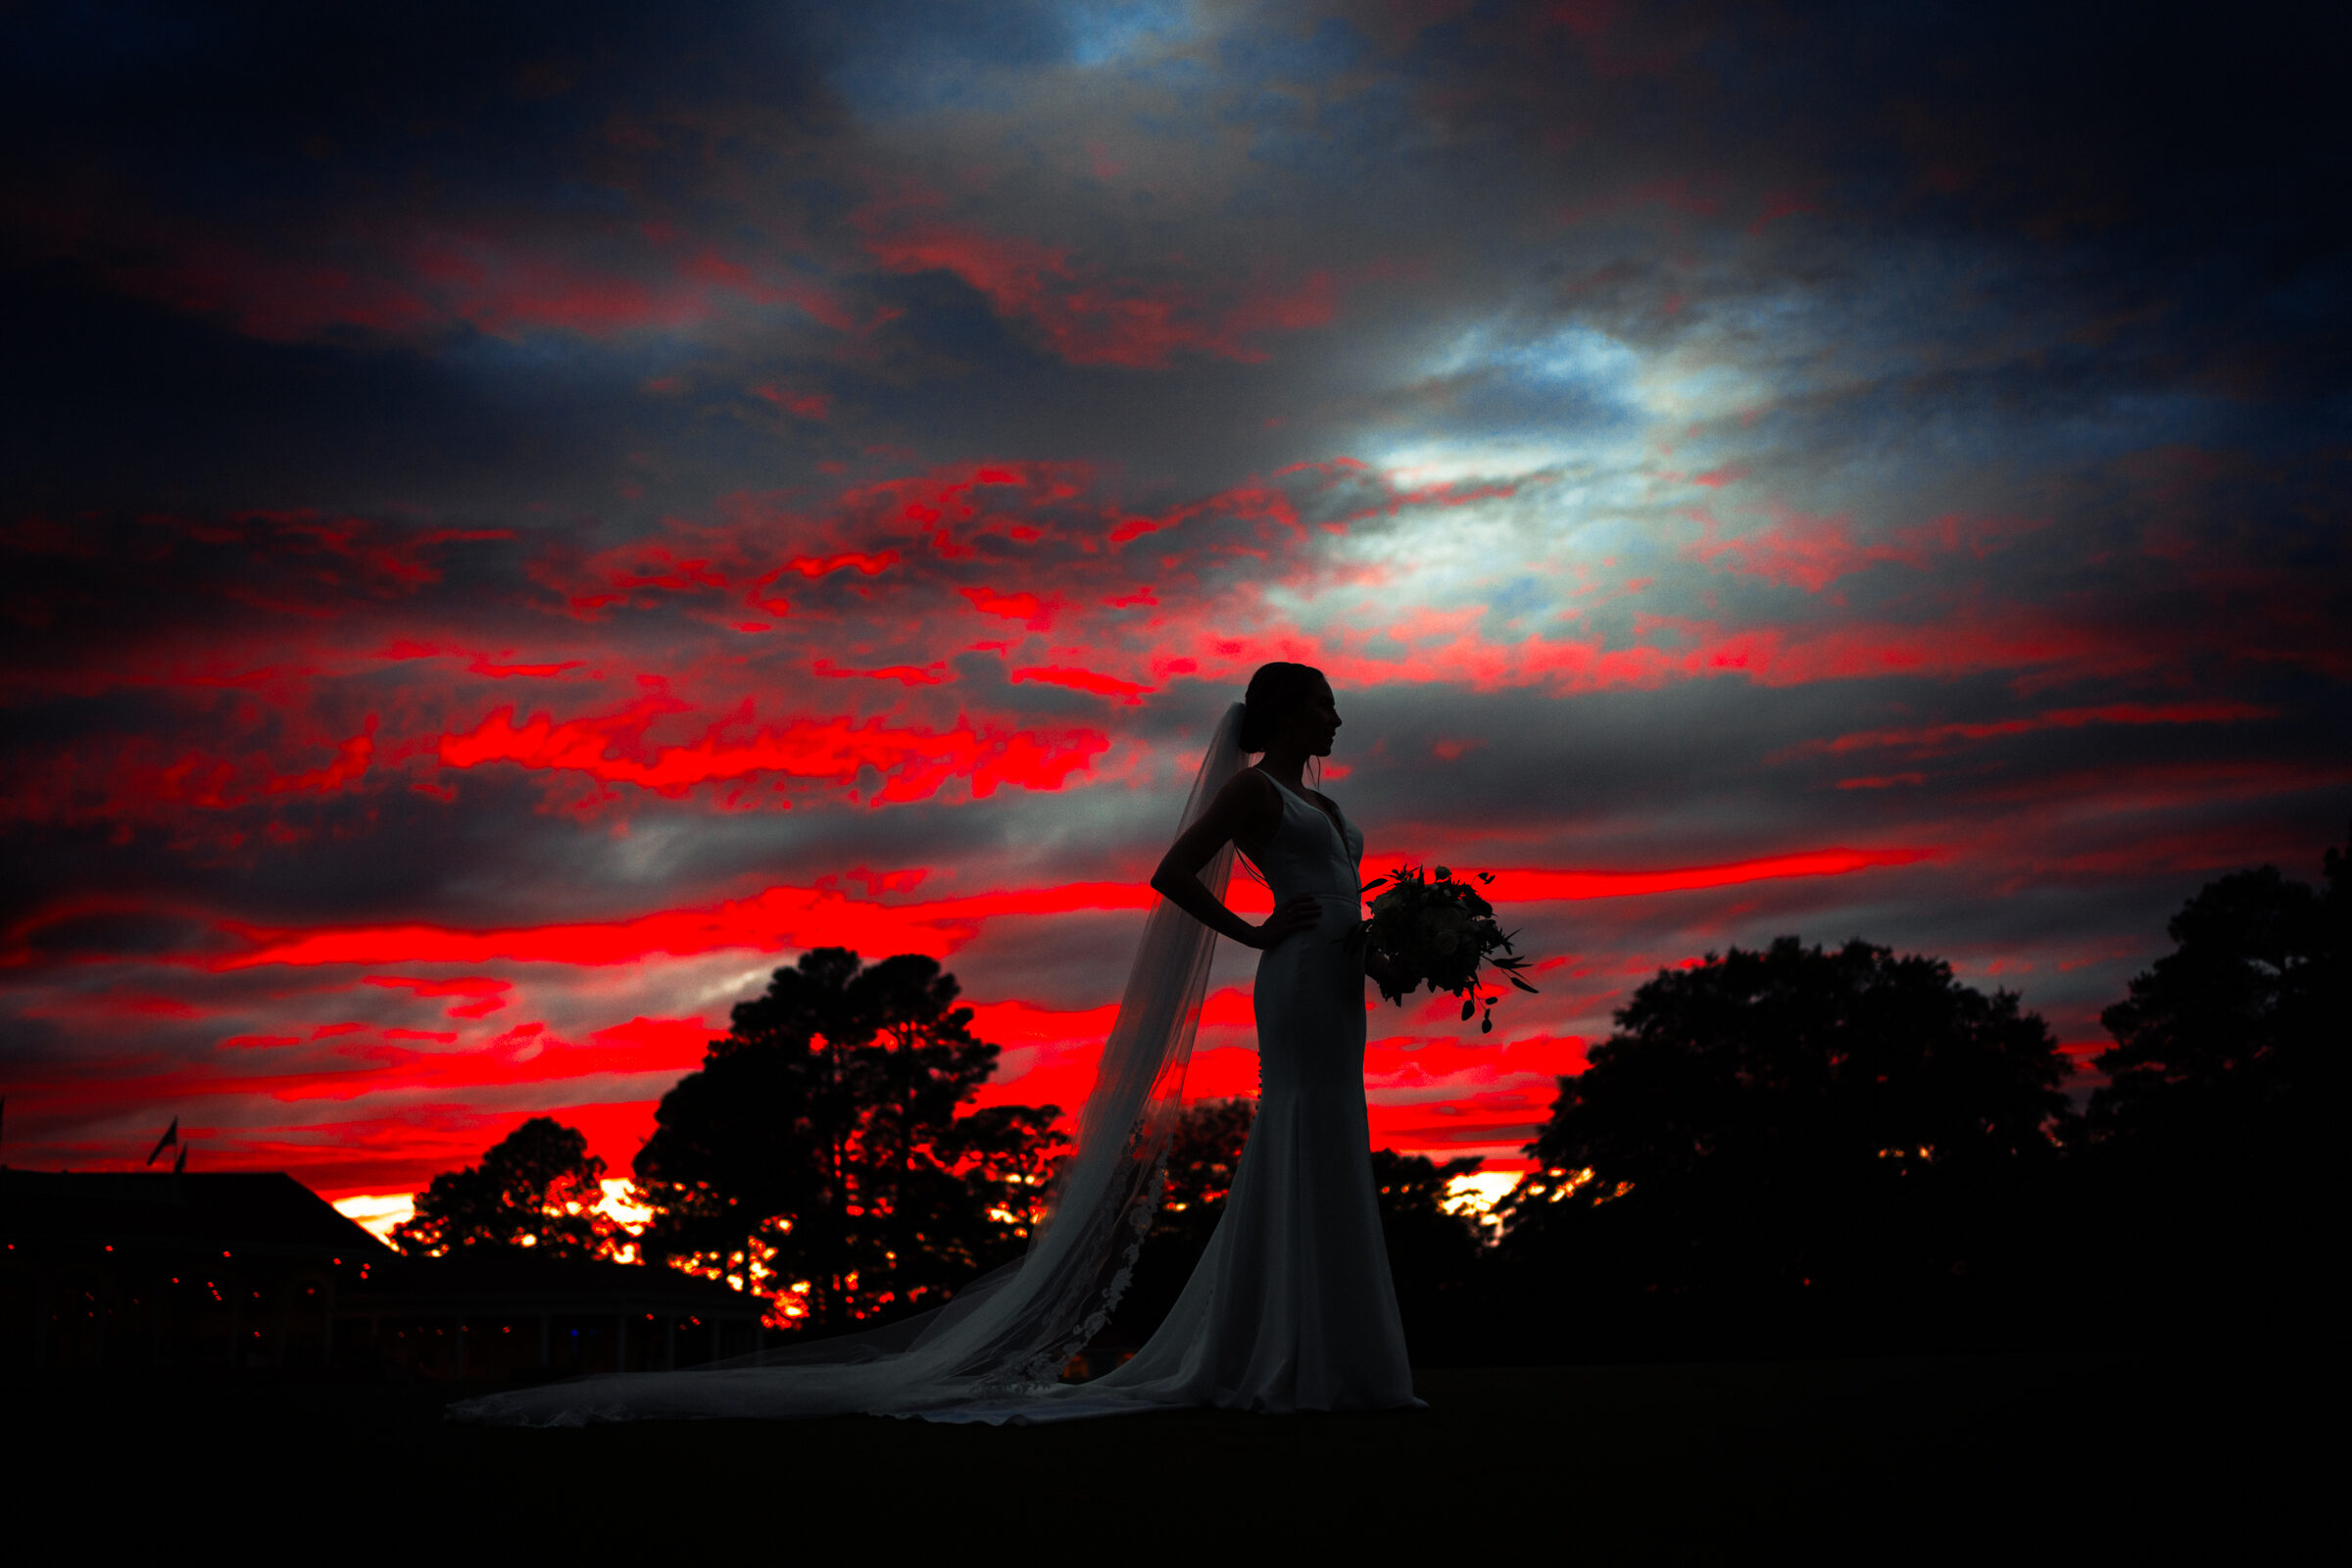 Pinehurst wedding photography – lindsey & brendan